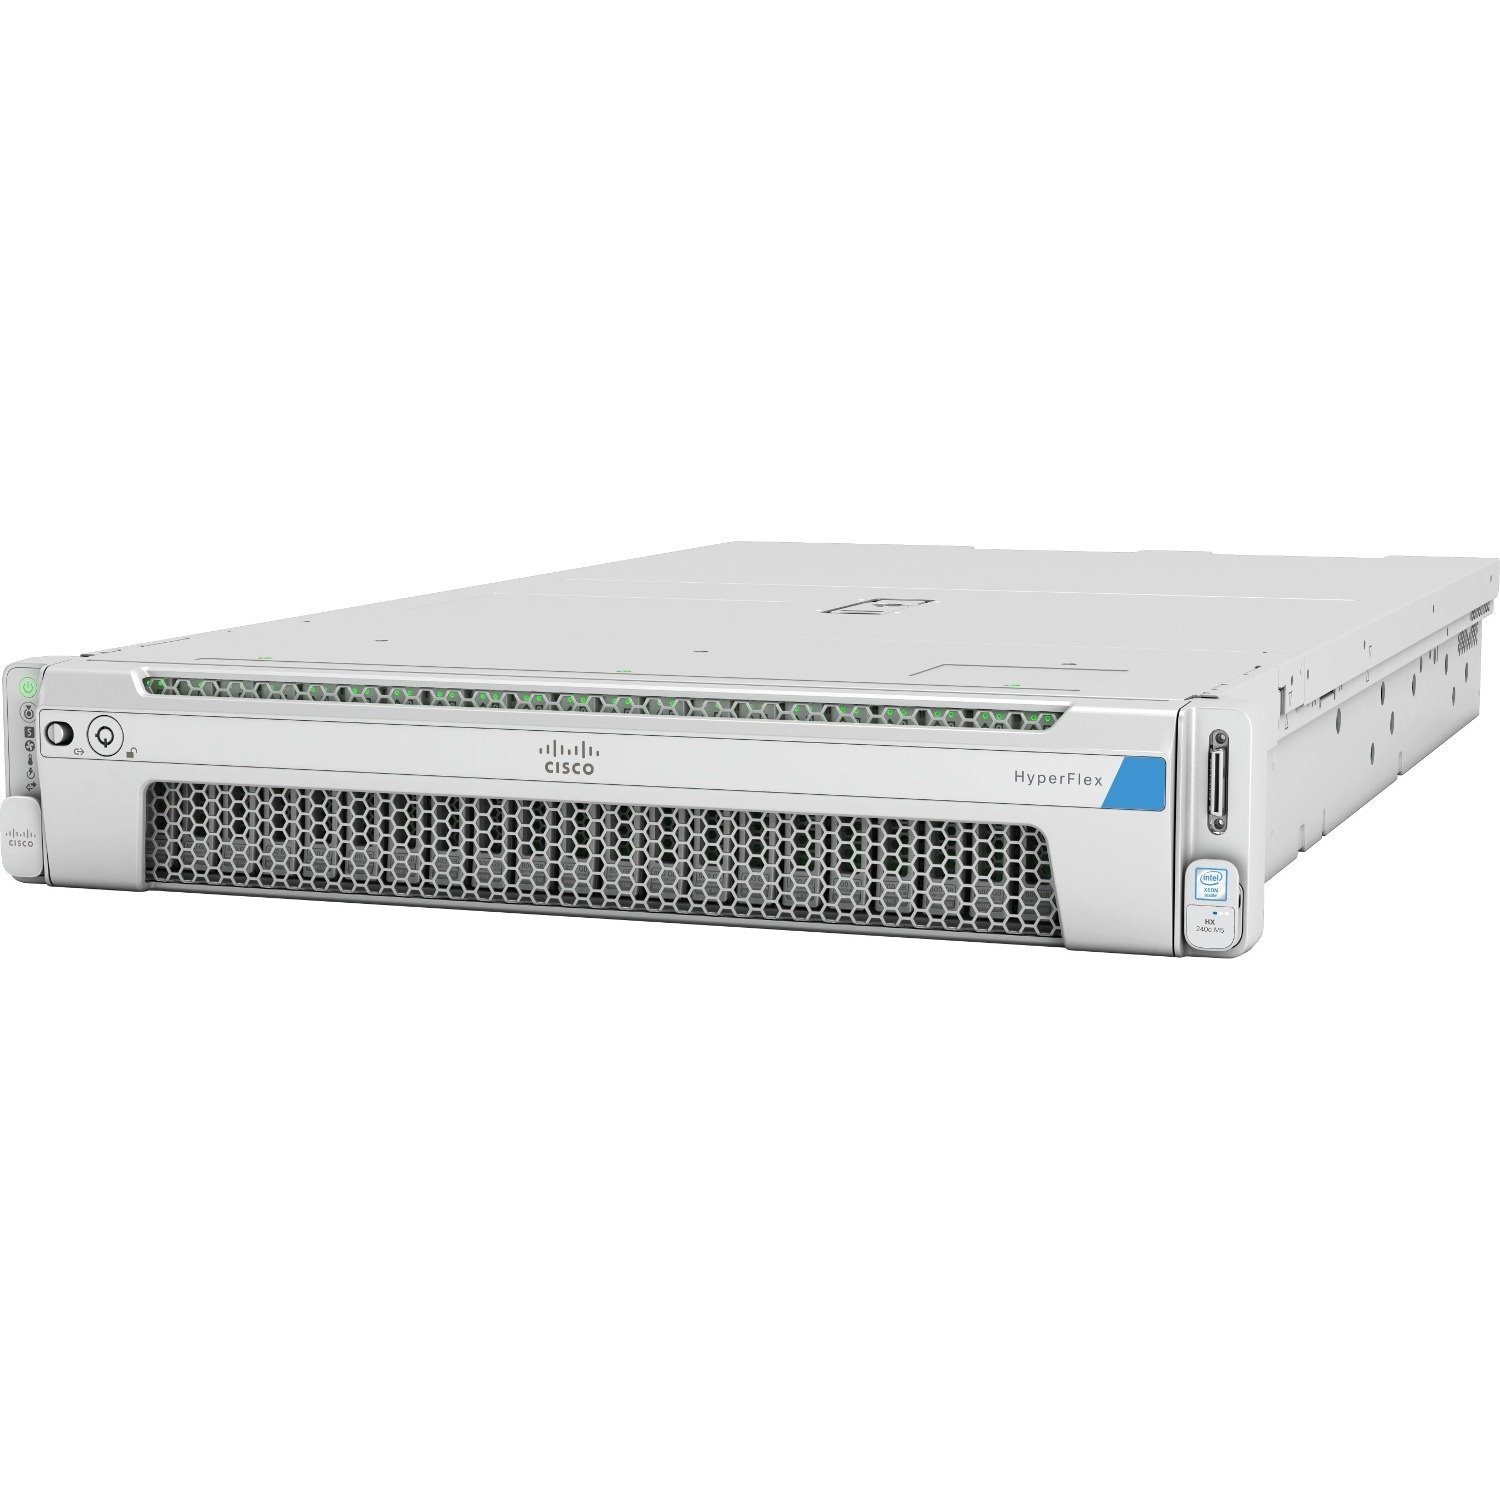 Cisco HyperFlex HX240c M5 2U Rack Server - 2 x Intel Xeon Silver 4114 2.20 GHz - 384 GB RAM - 240 GB SSD - 12Gb/s SAS Controller